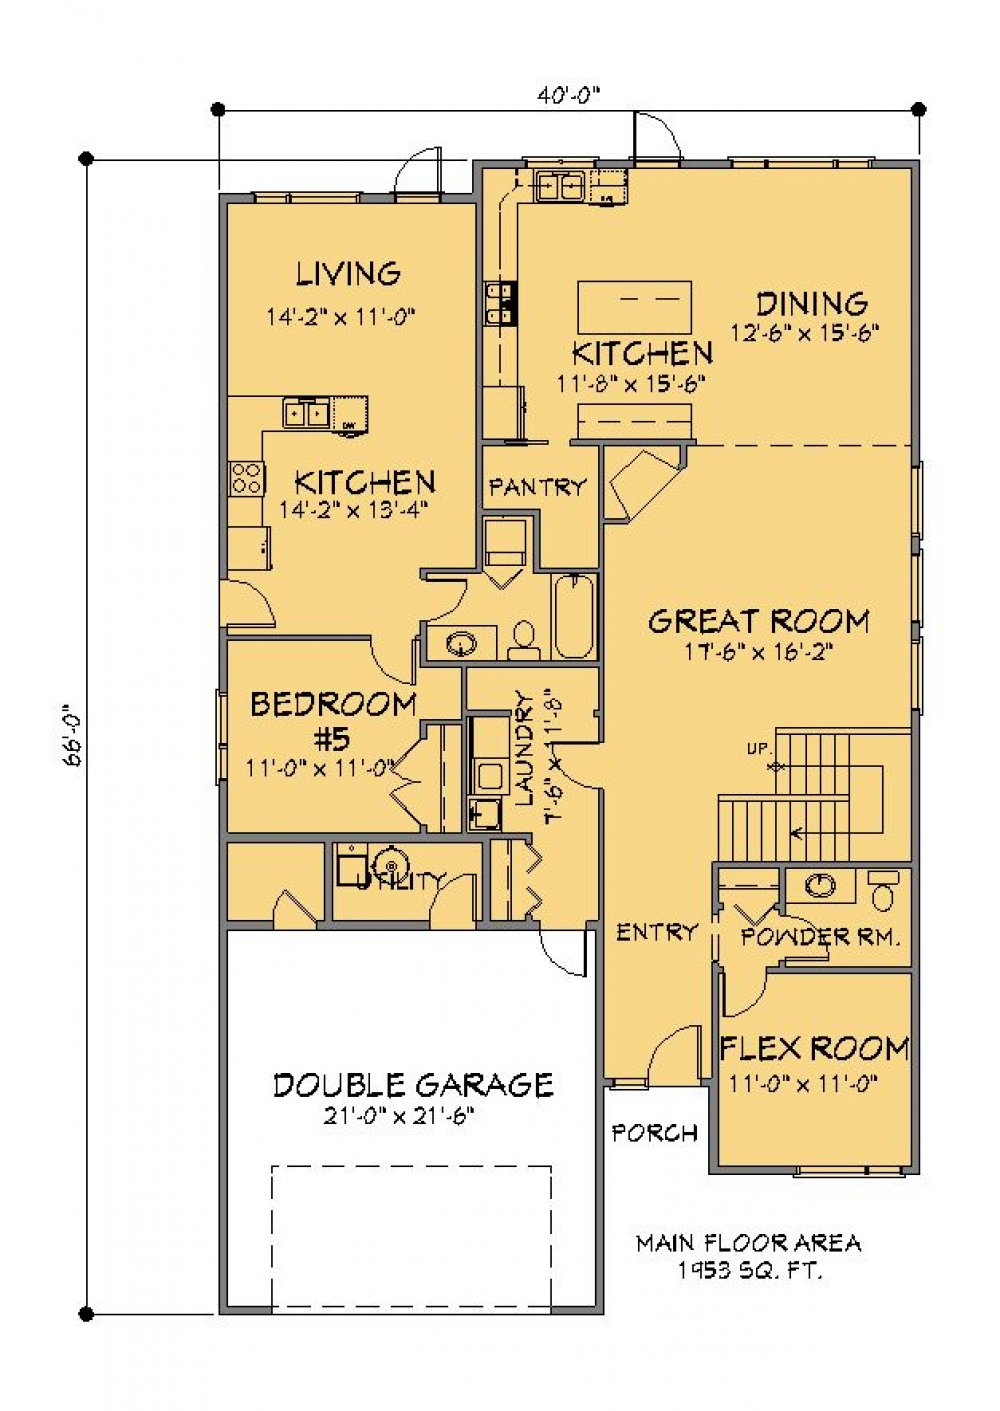 House Plan E1713-10  Main Floor Plan